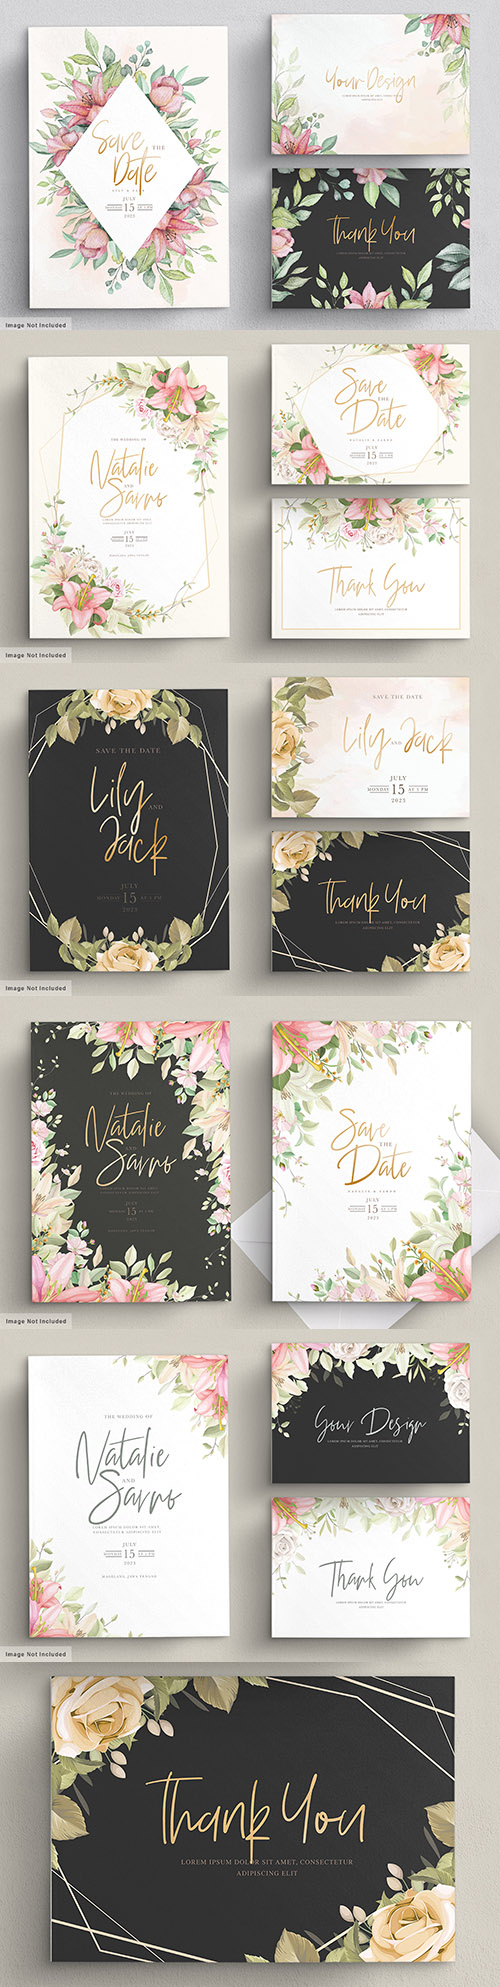 Floral wedding invitations design set drawn illustration